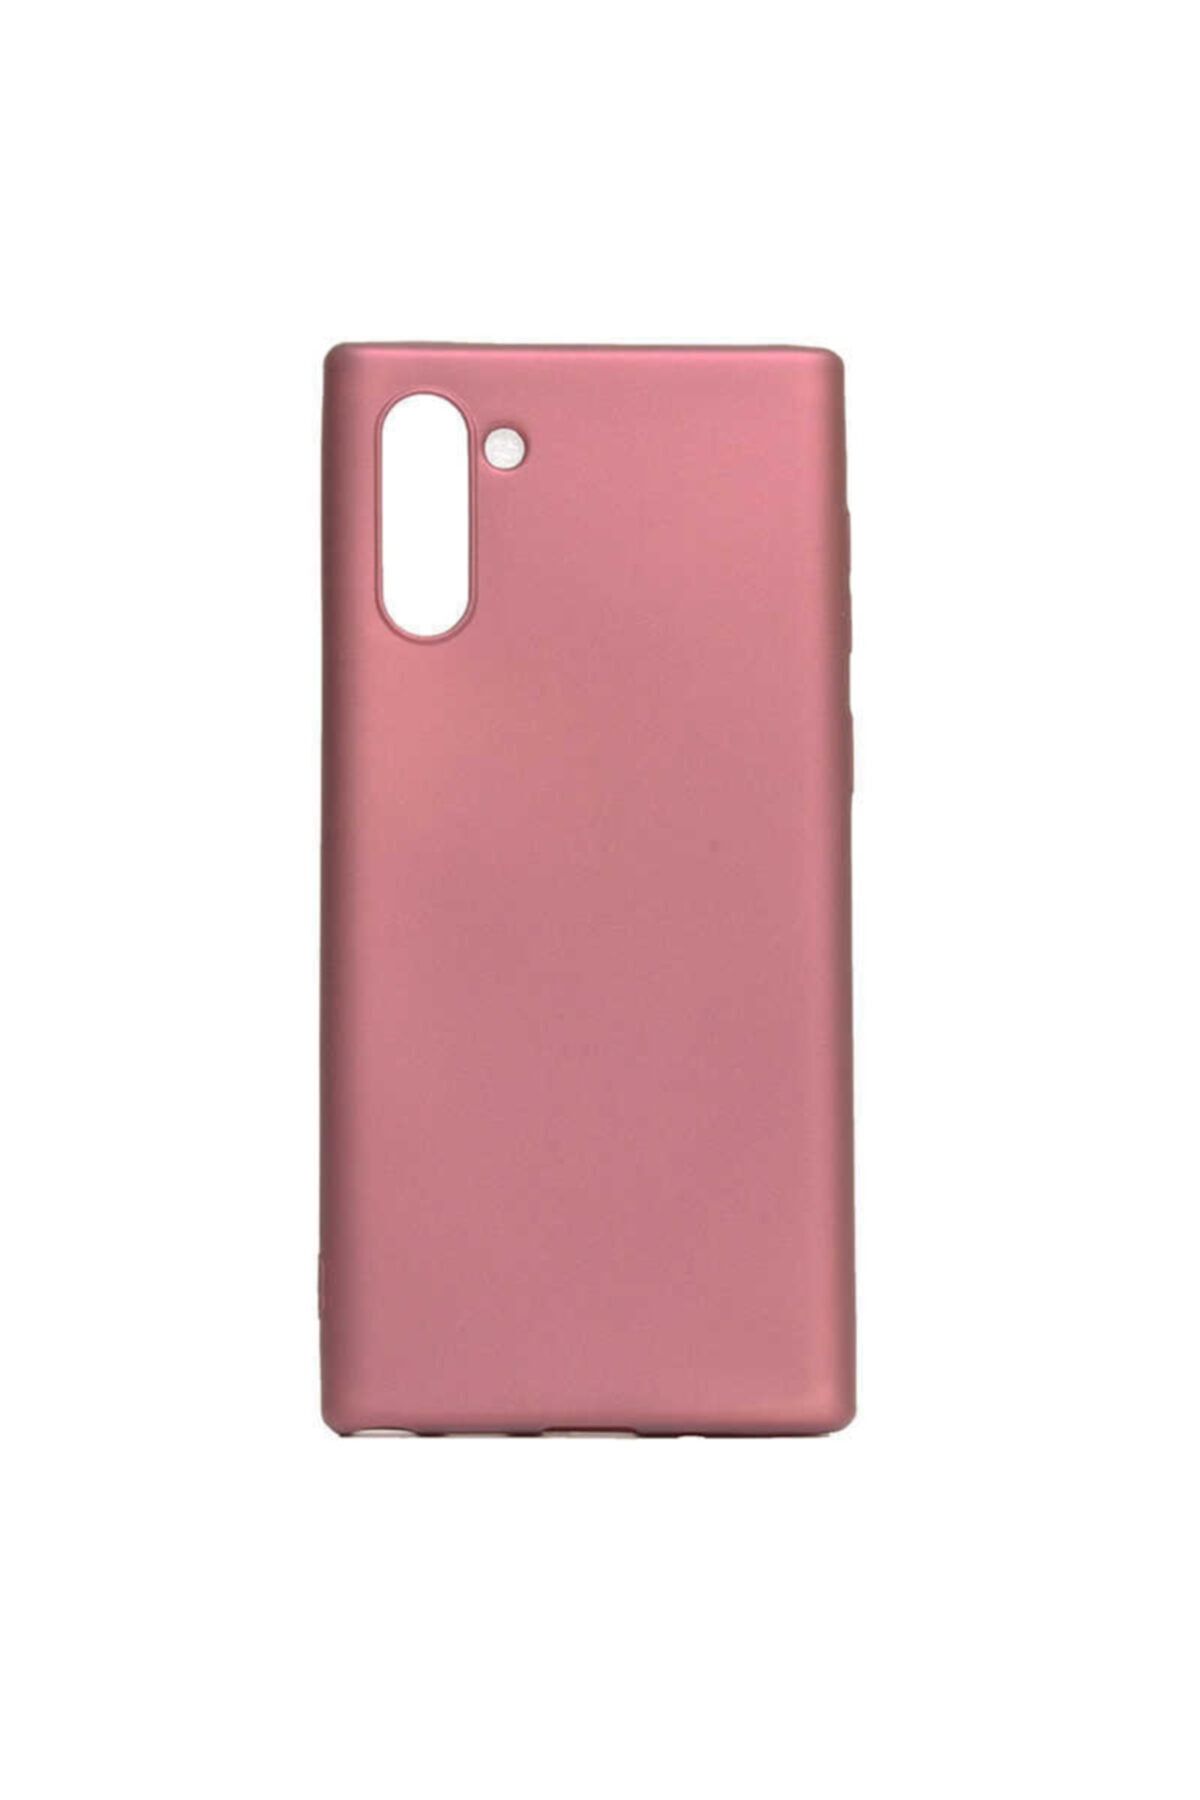 İncisoft Galaxy Note 10 Uyumlu Ince Yumuşak Soft Tasarım Renkli Silikon Kılıf